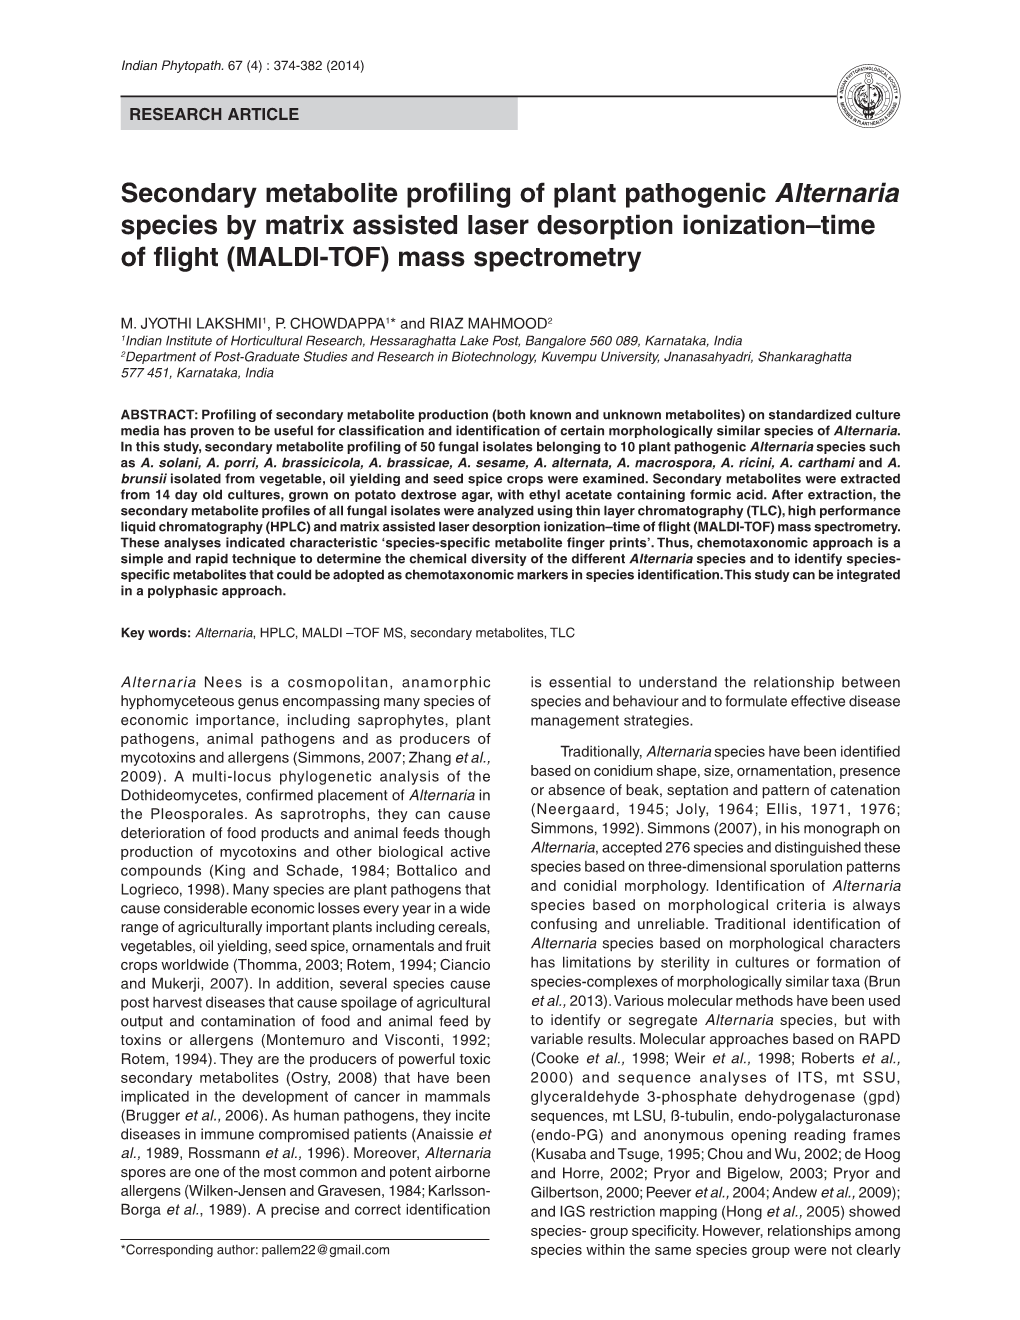 Secondary Metabolite Profiling of Plant Pathogenic Alternaria Species by Matrix Assisted Laser Desorption Ionization–Time of Flight (MALDI-TOF) Mass Spectrometry